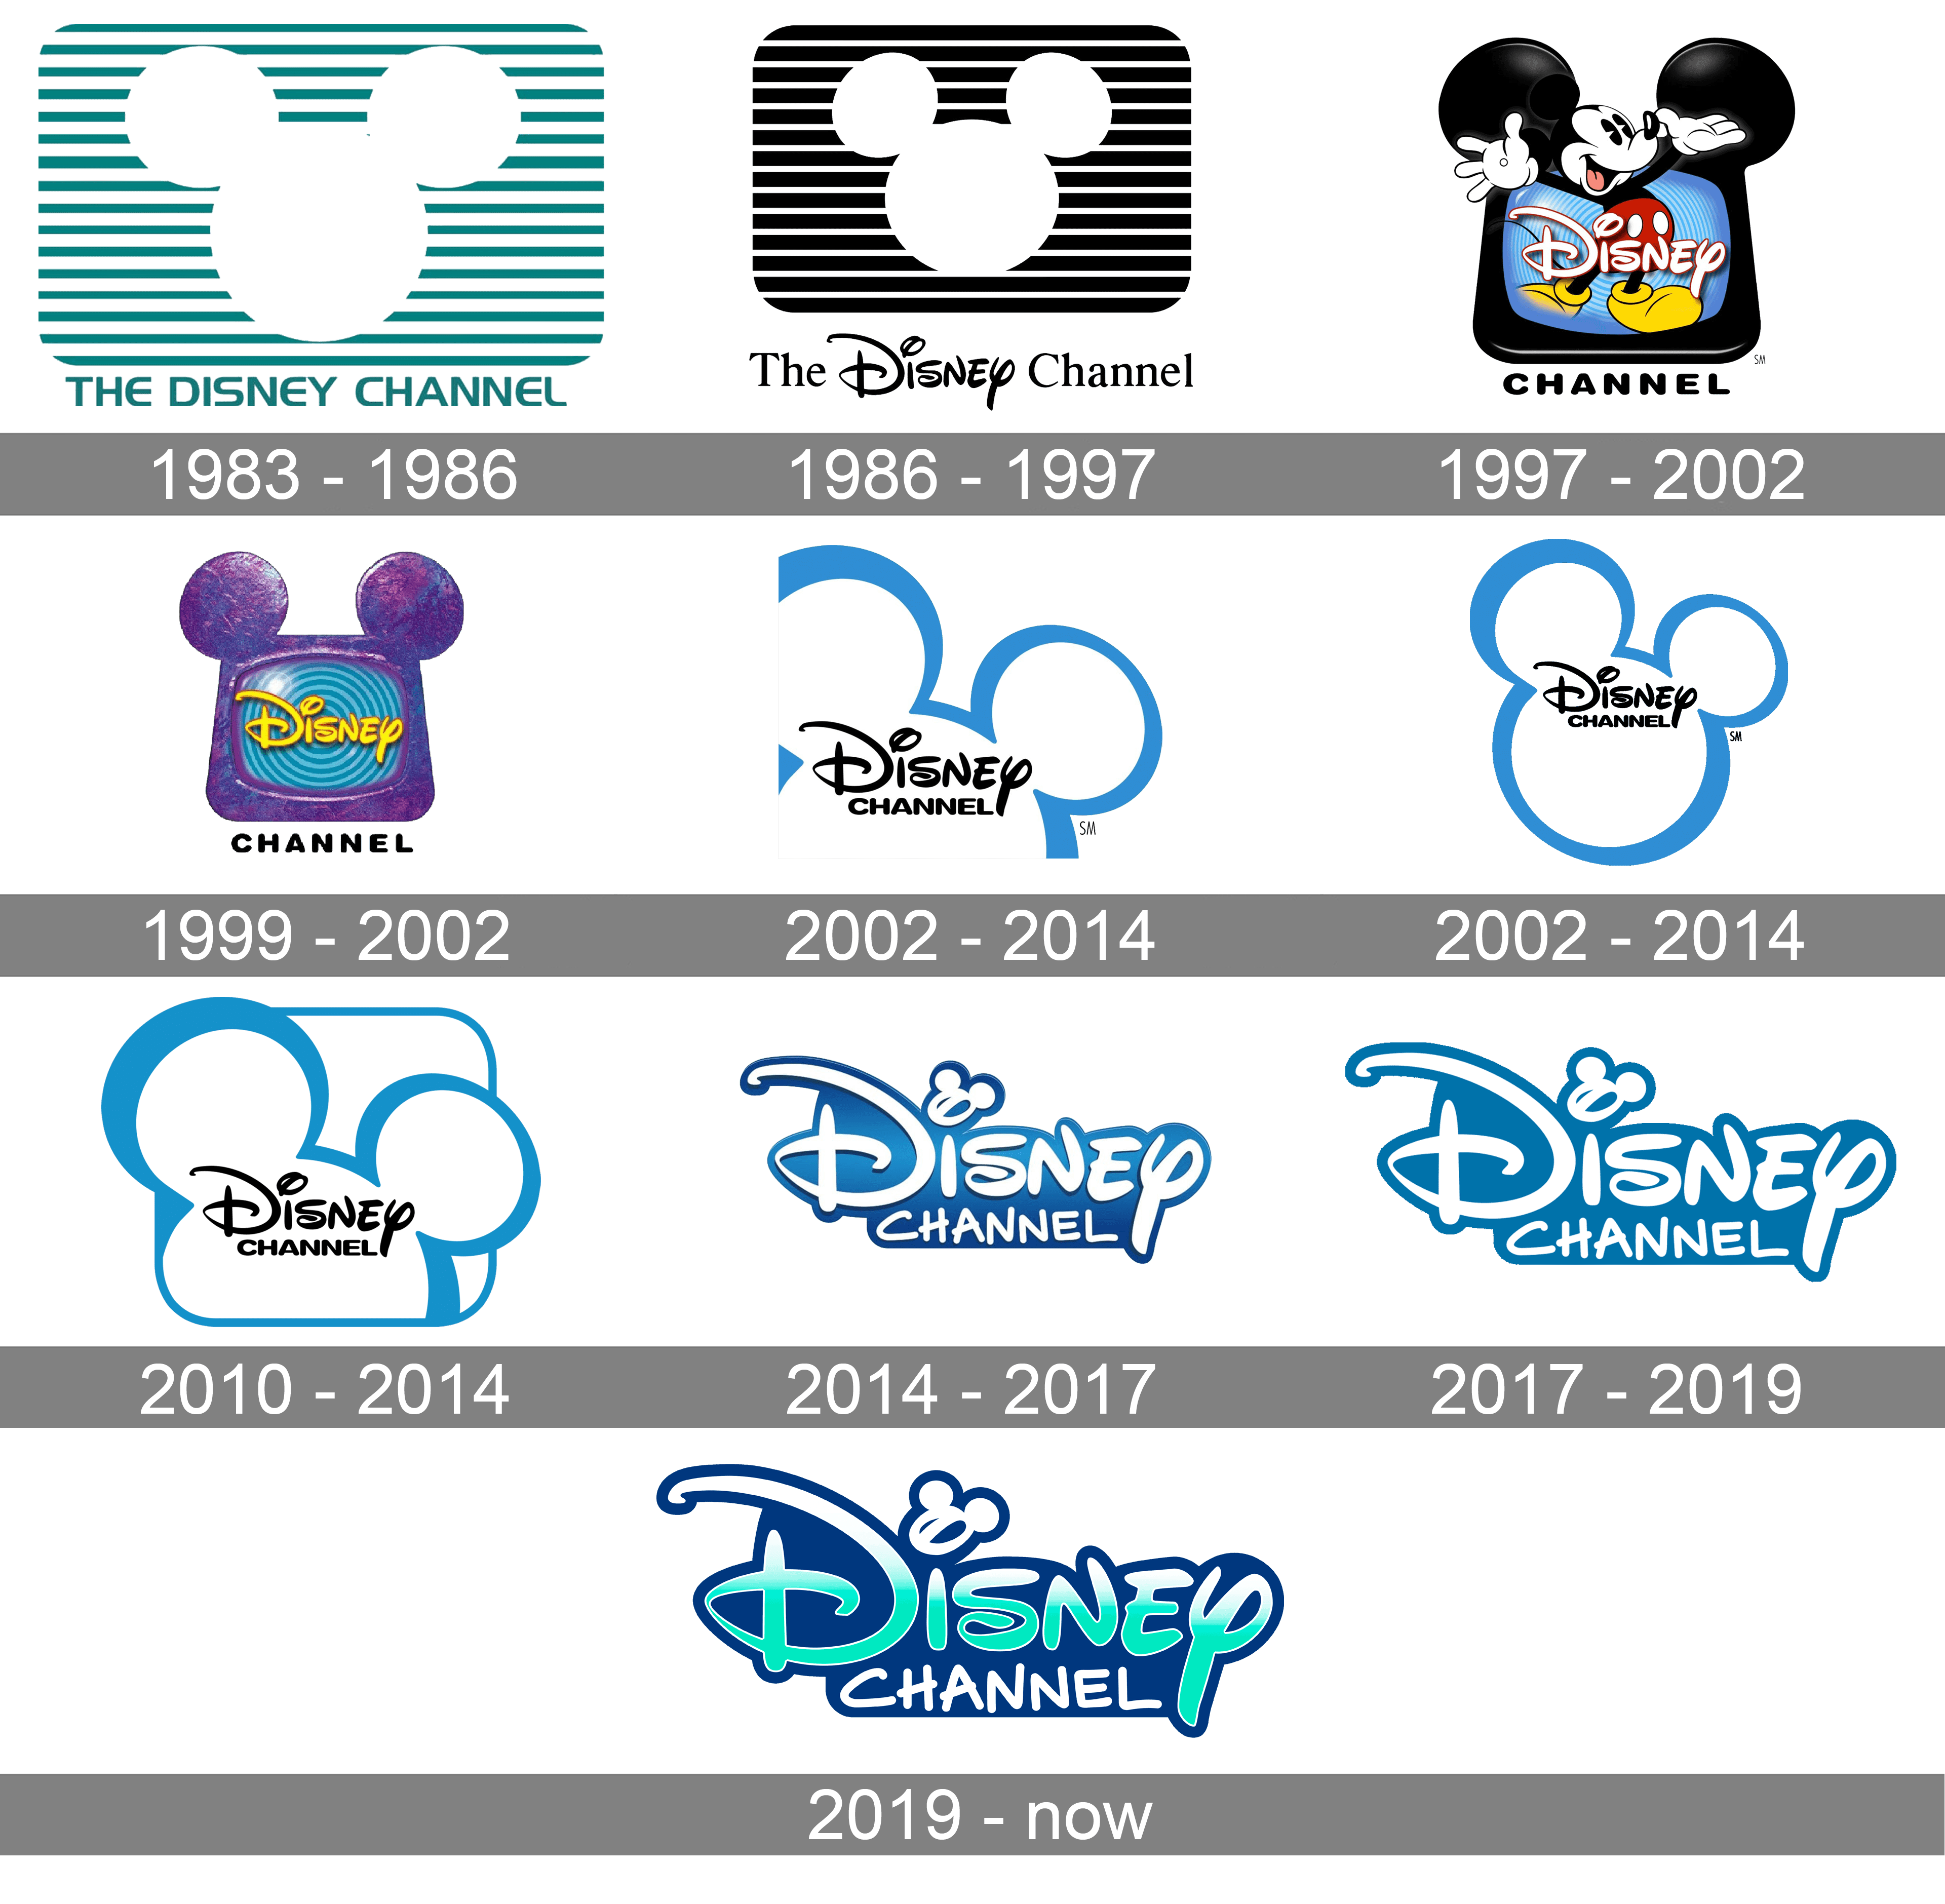 Disney Channel Logo PNG Image